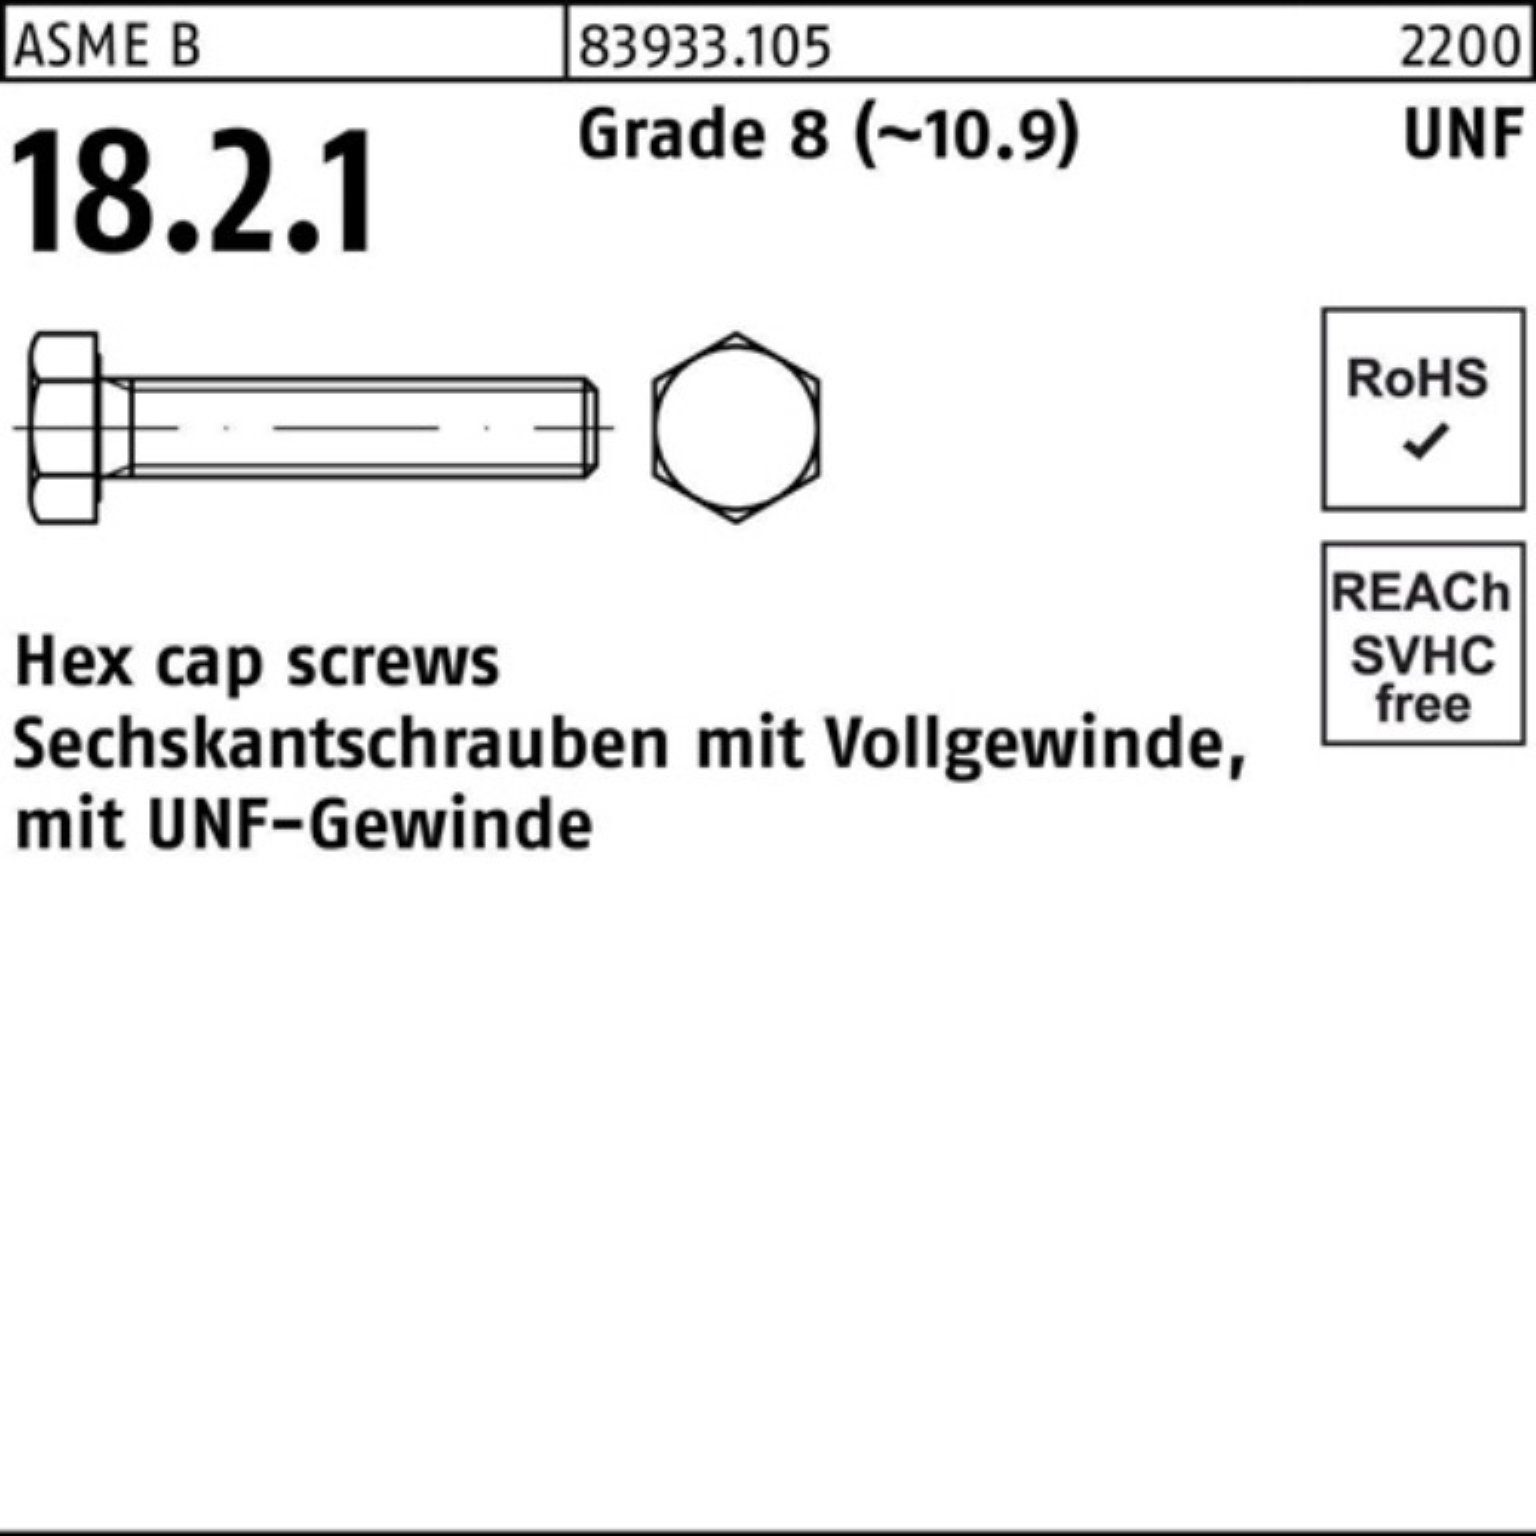 Sechskantschraube 8 5/8 1/4x Pack UNF-Gewinde Grade Reyher VG R 83933 Sechskantschraube 100er